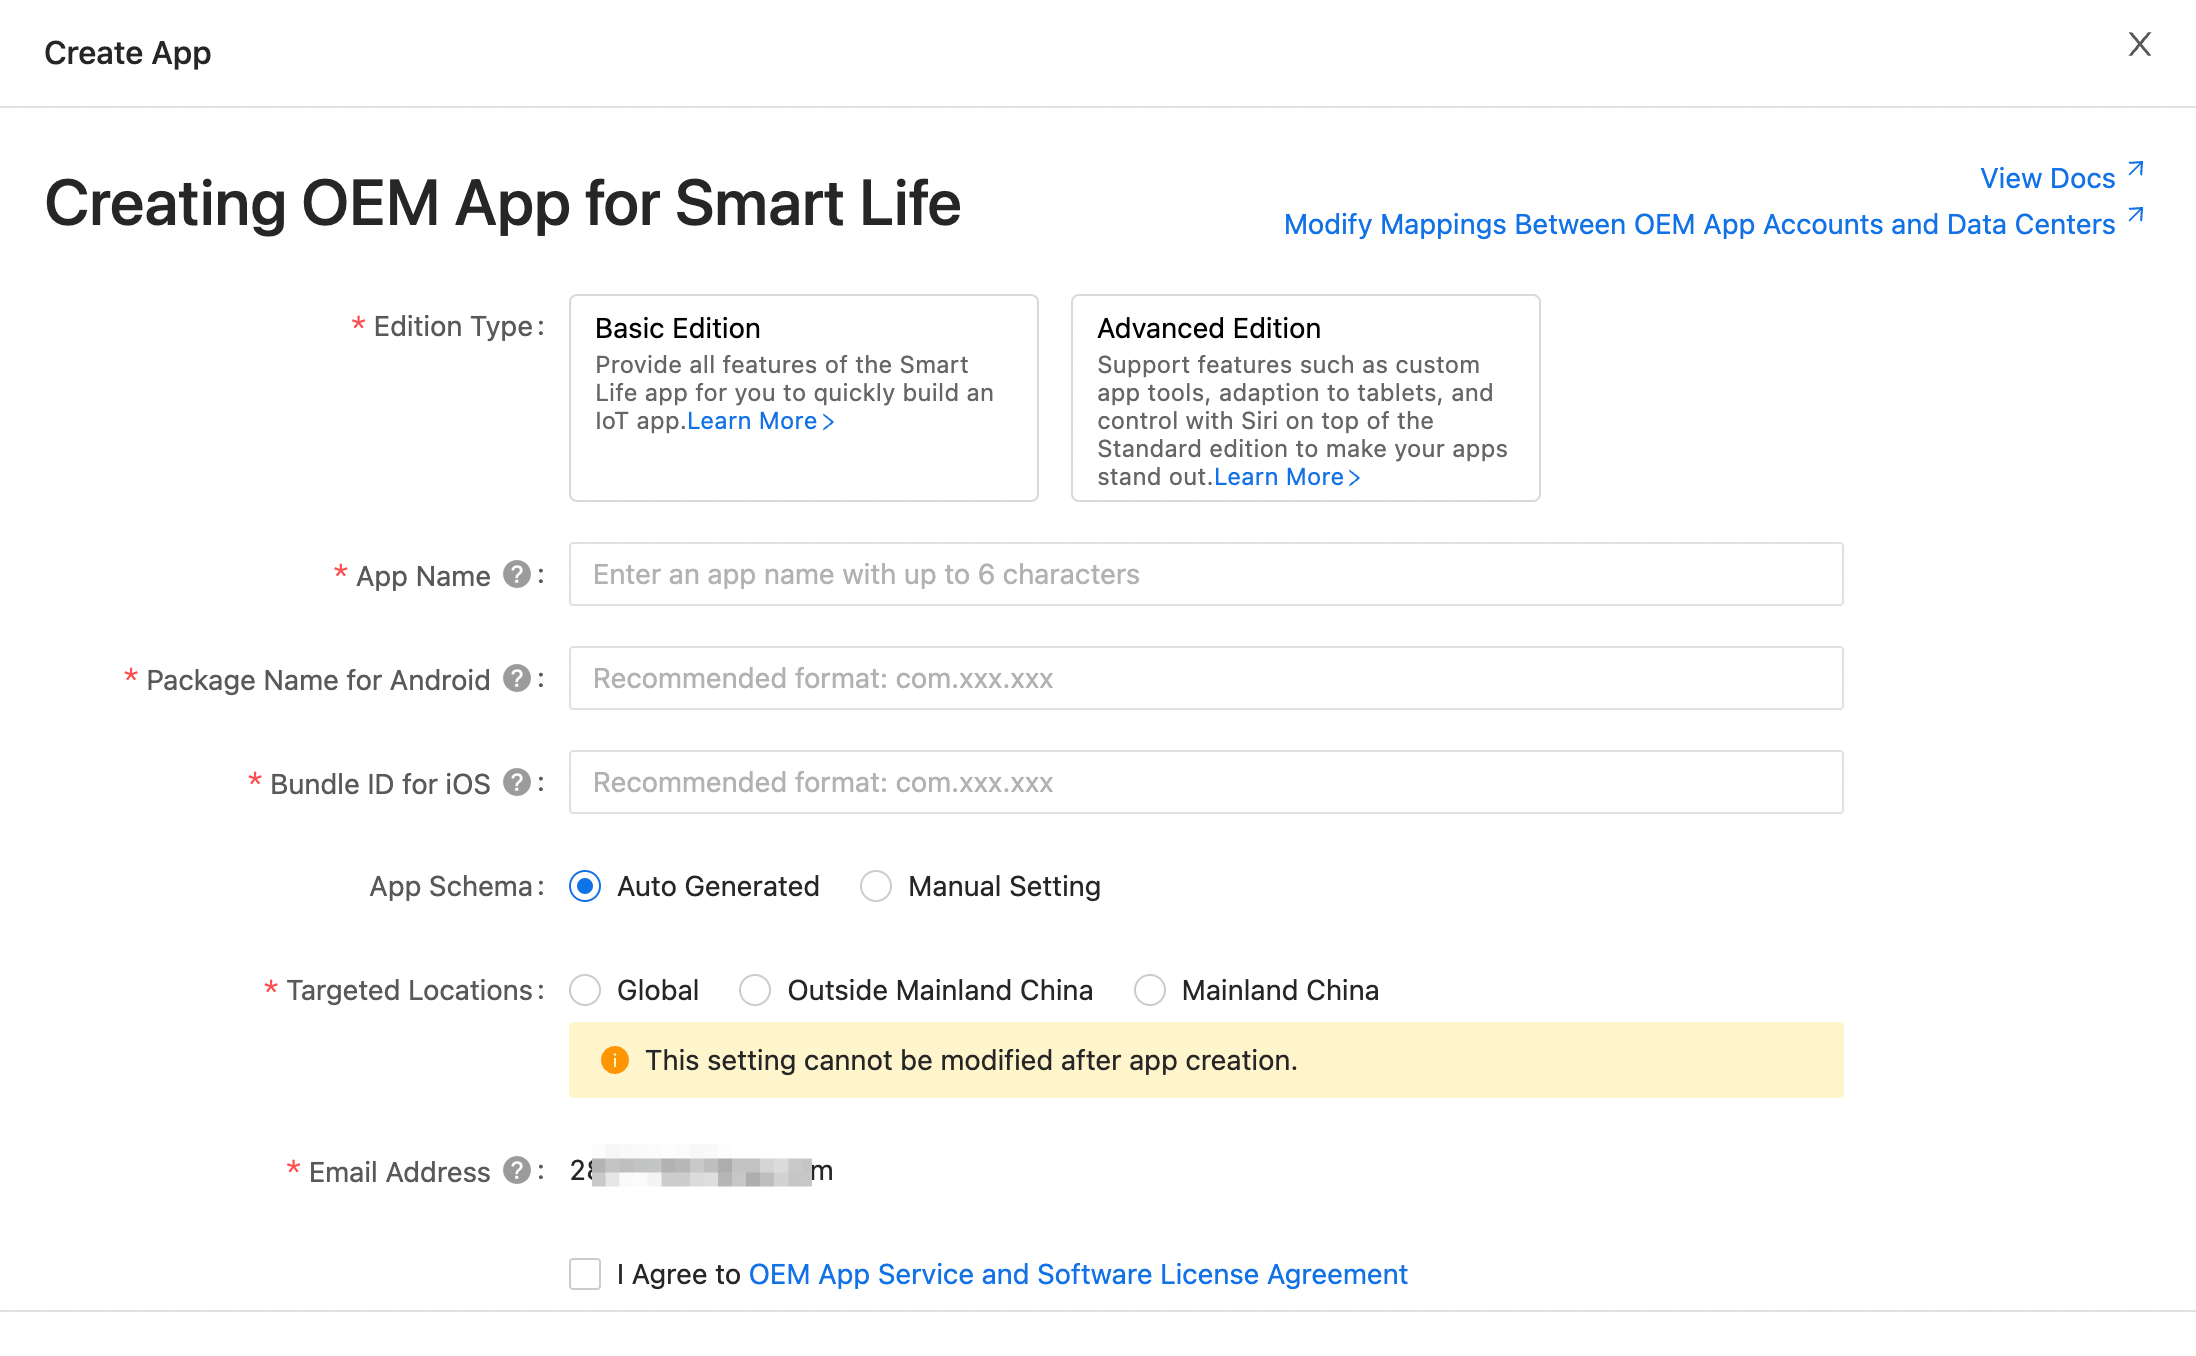 Create an OEM App for Smart Life